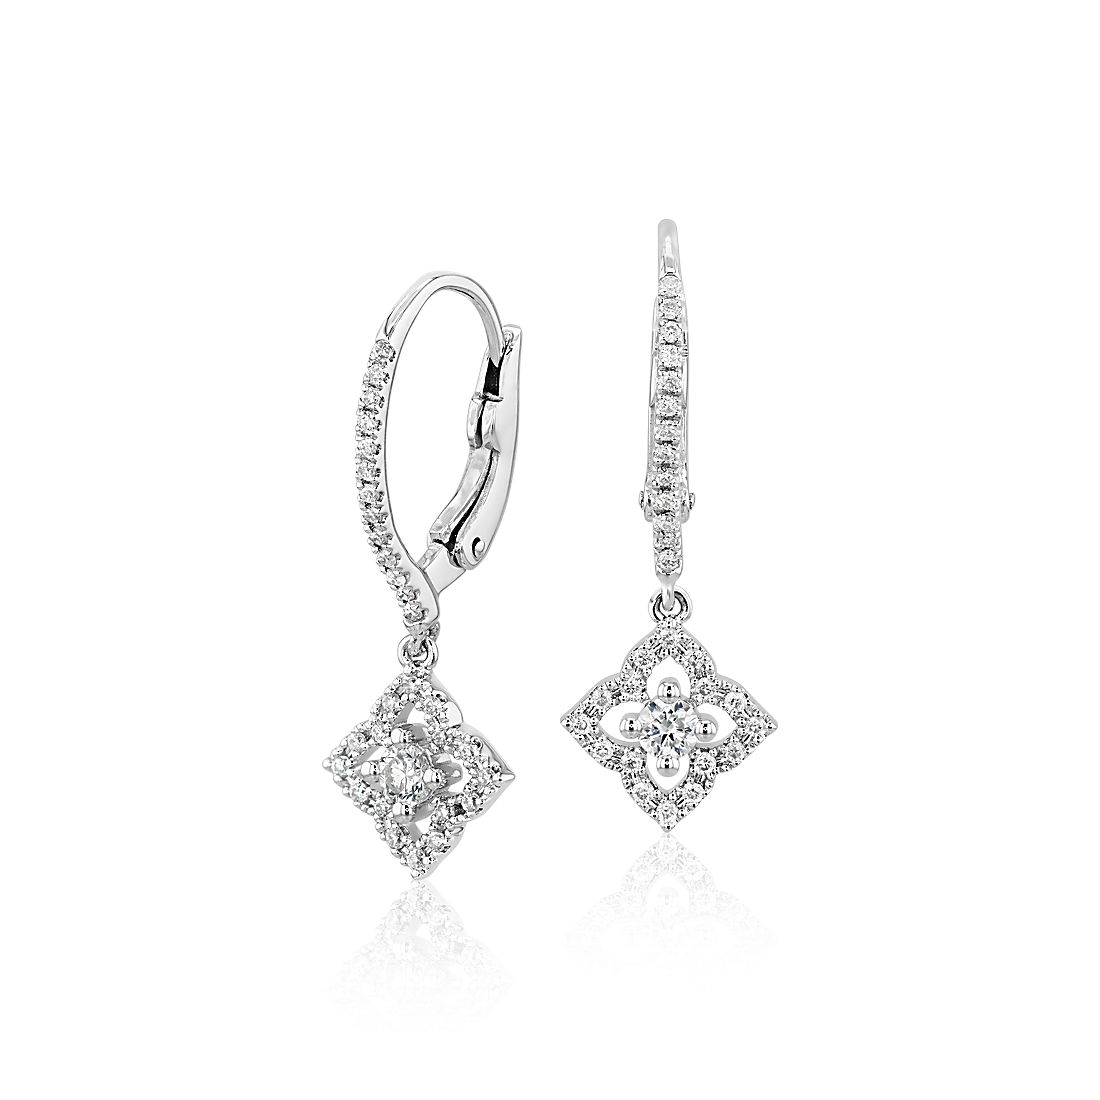 Petite Diamond Floral Drop Earrings in 14k White Gold